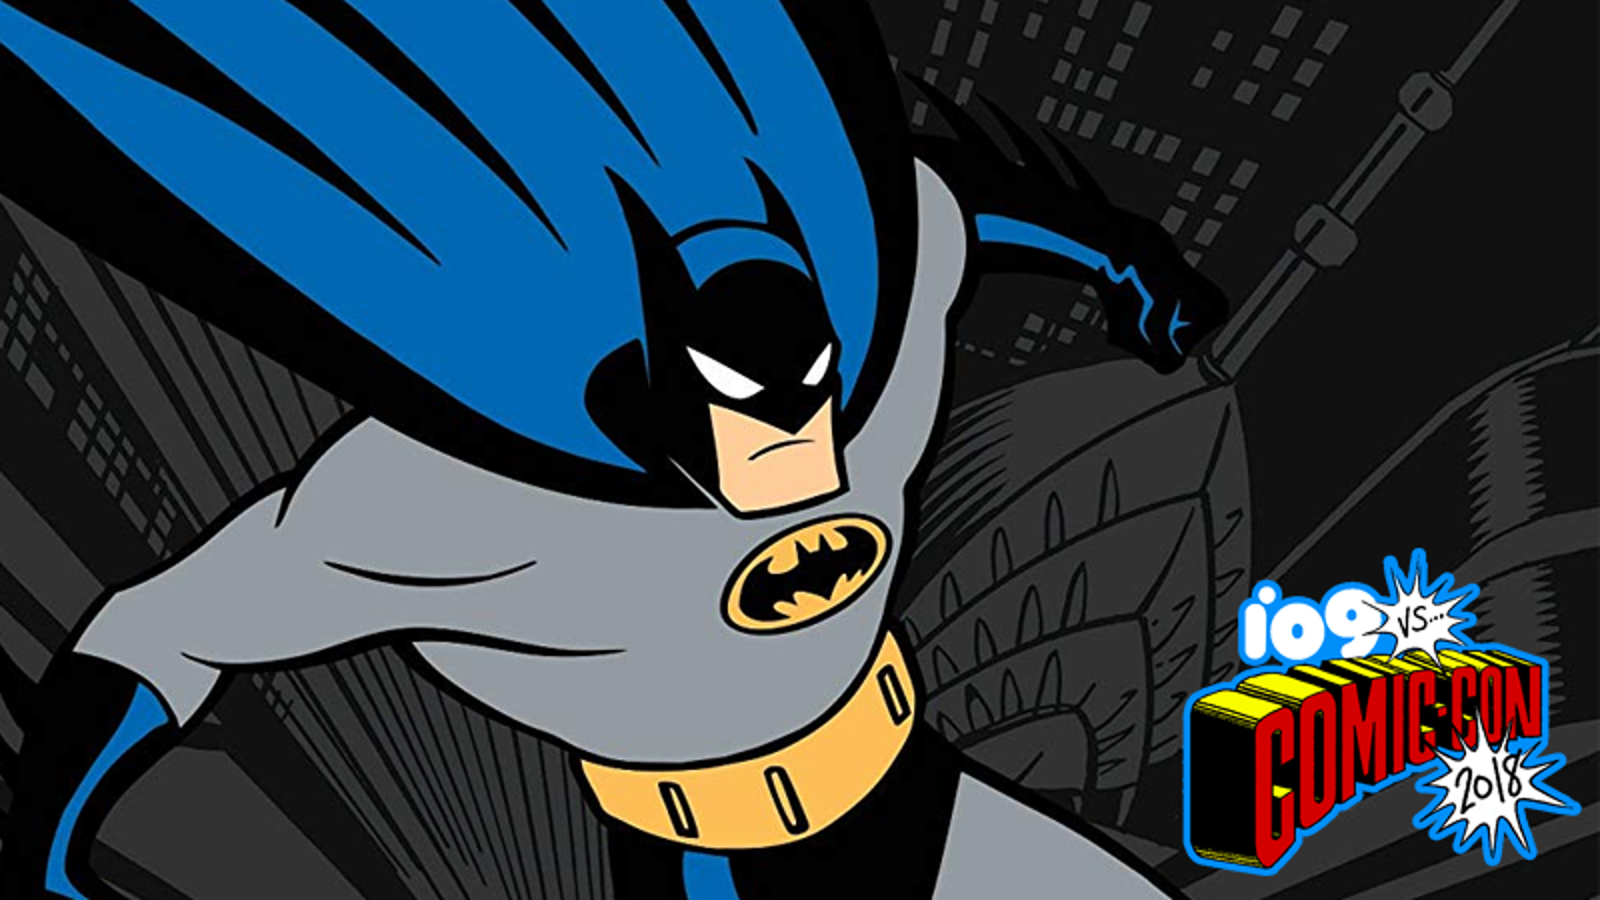 Batman Cartoon Movies List / Ranking the Five Best Batman Animated